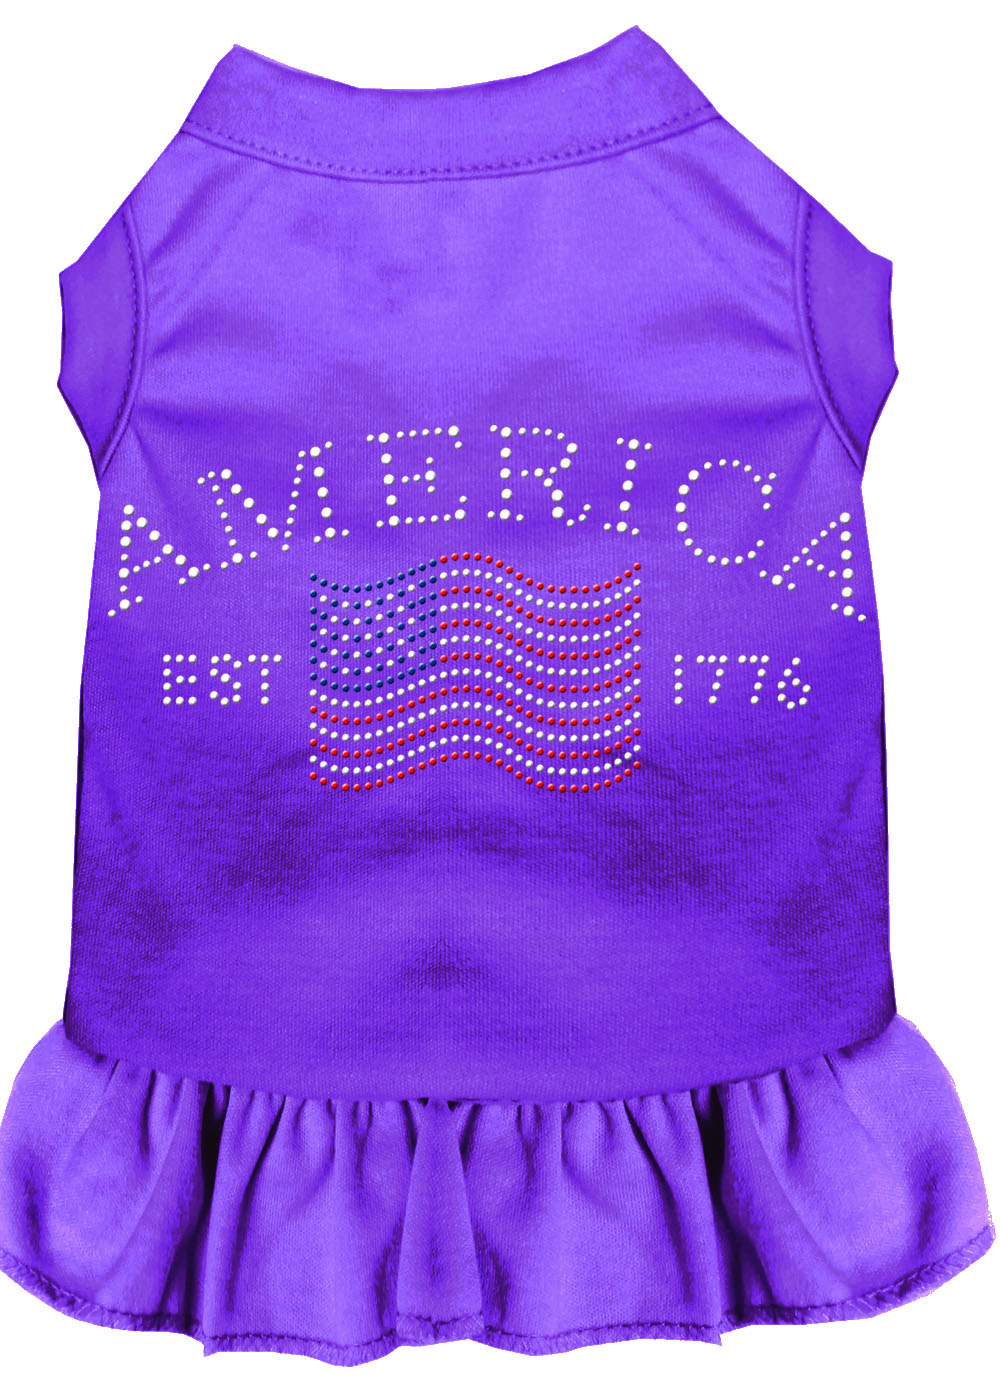 Classic America Rhinestone Dress Purple Lg